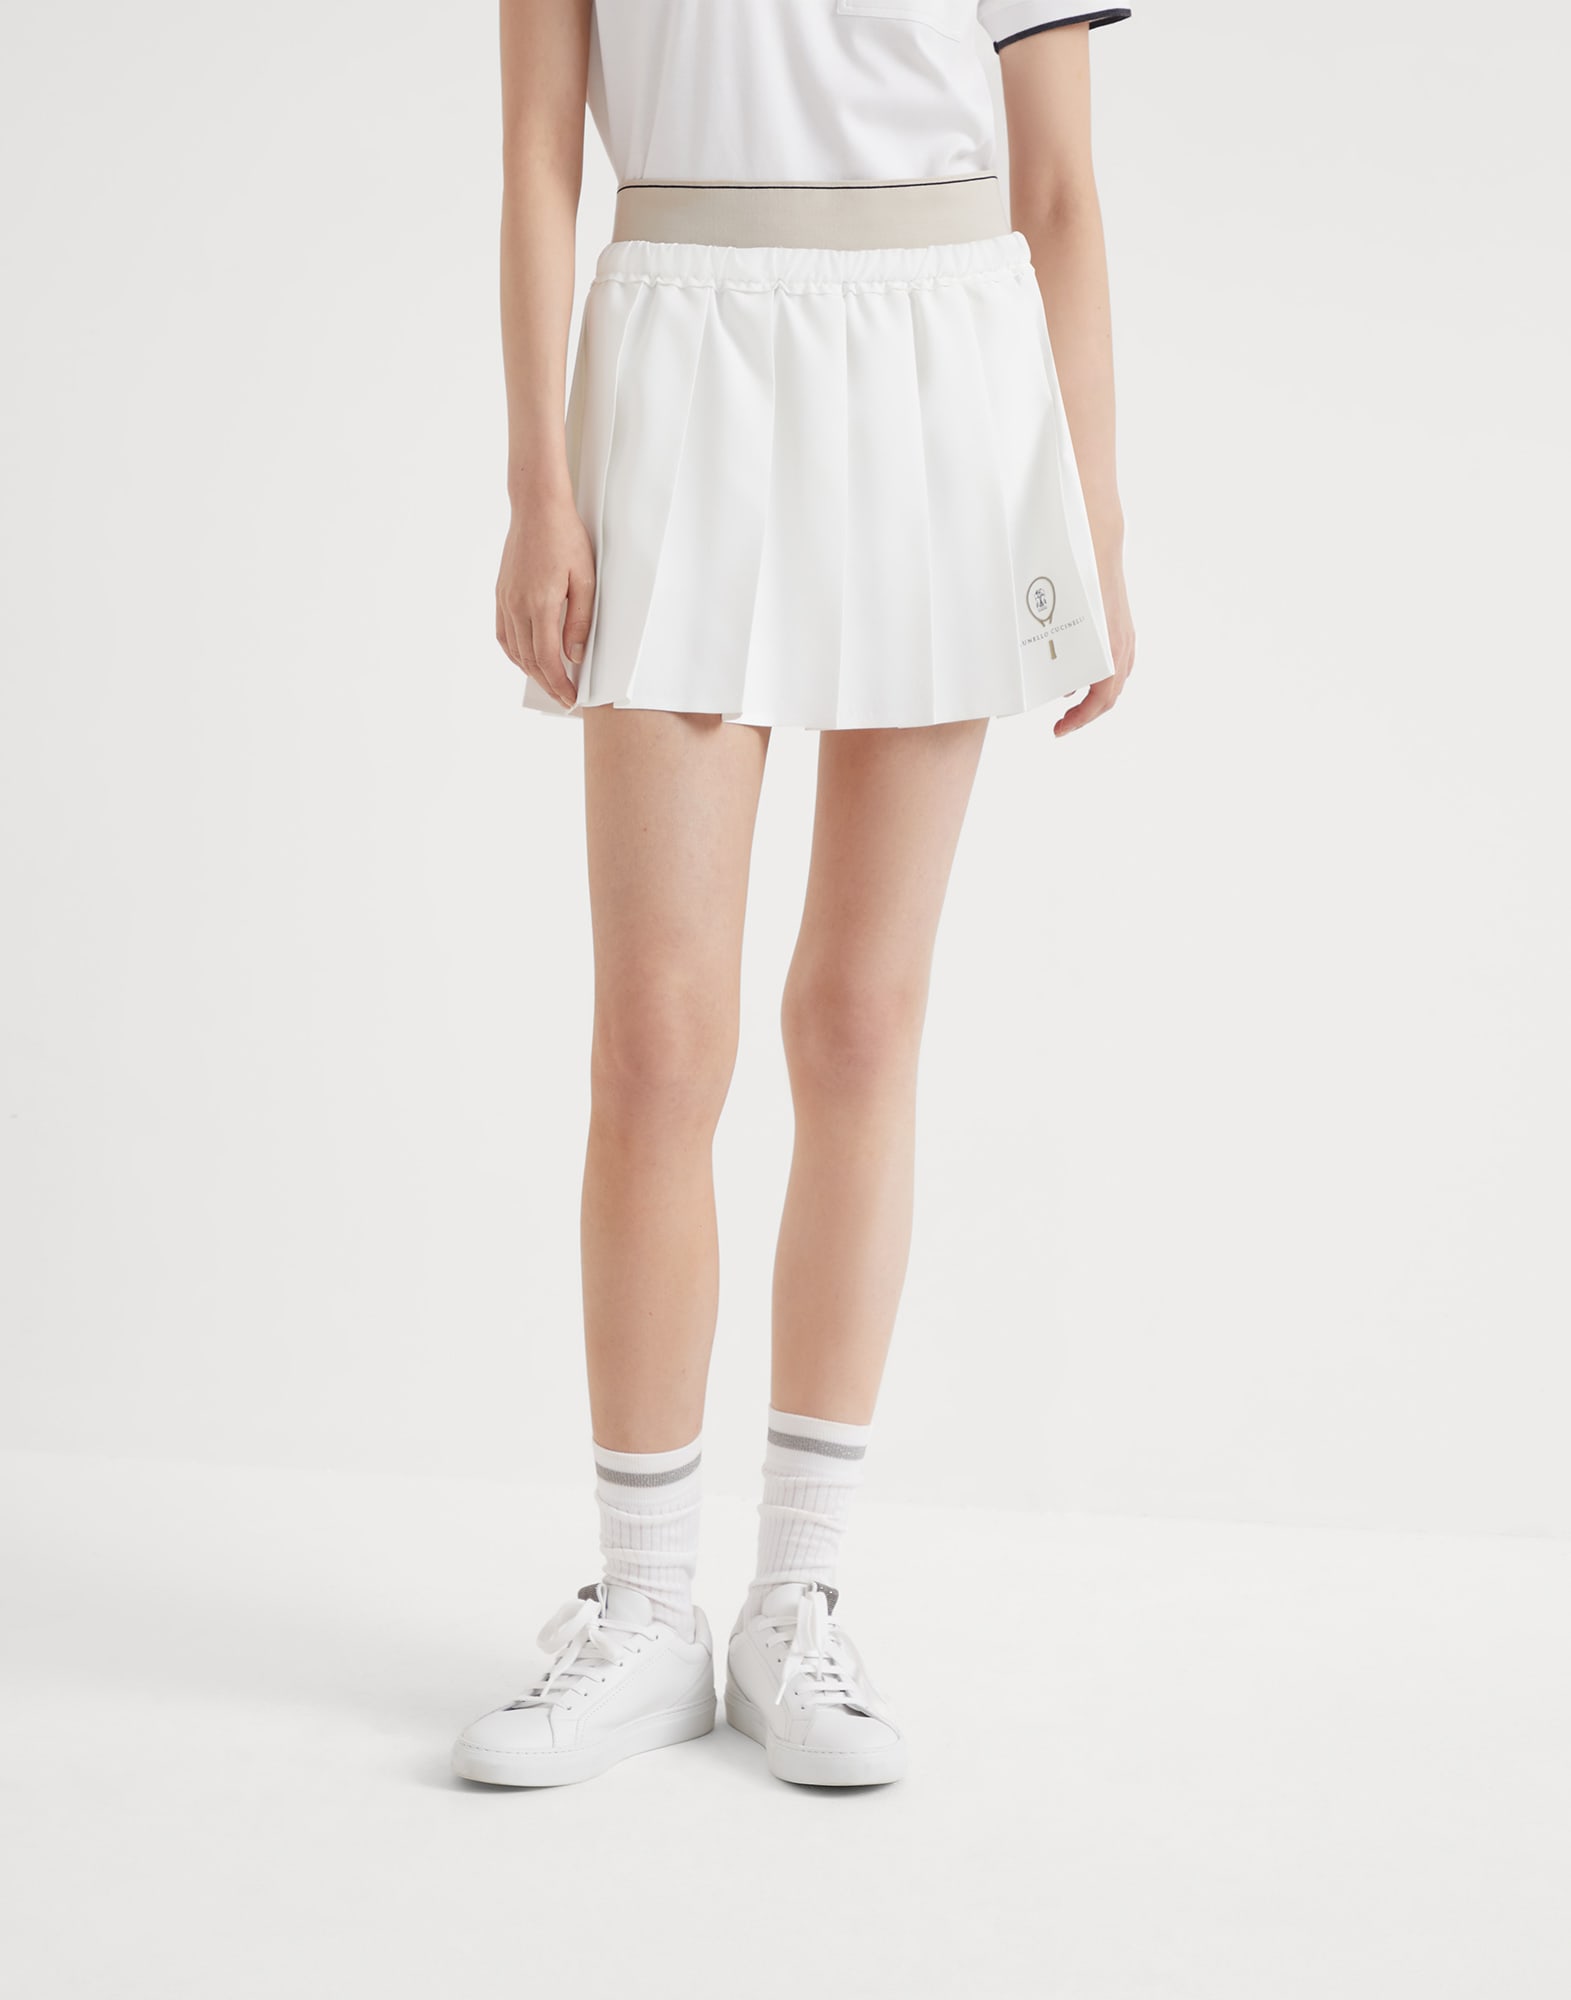 Miniskirt with Tennis Logo